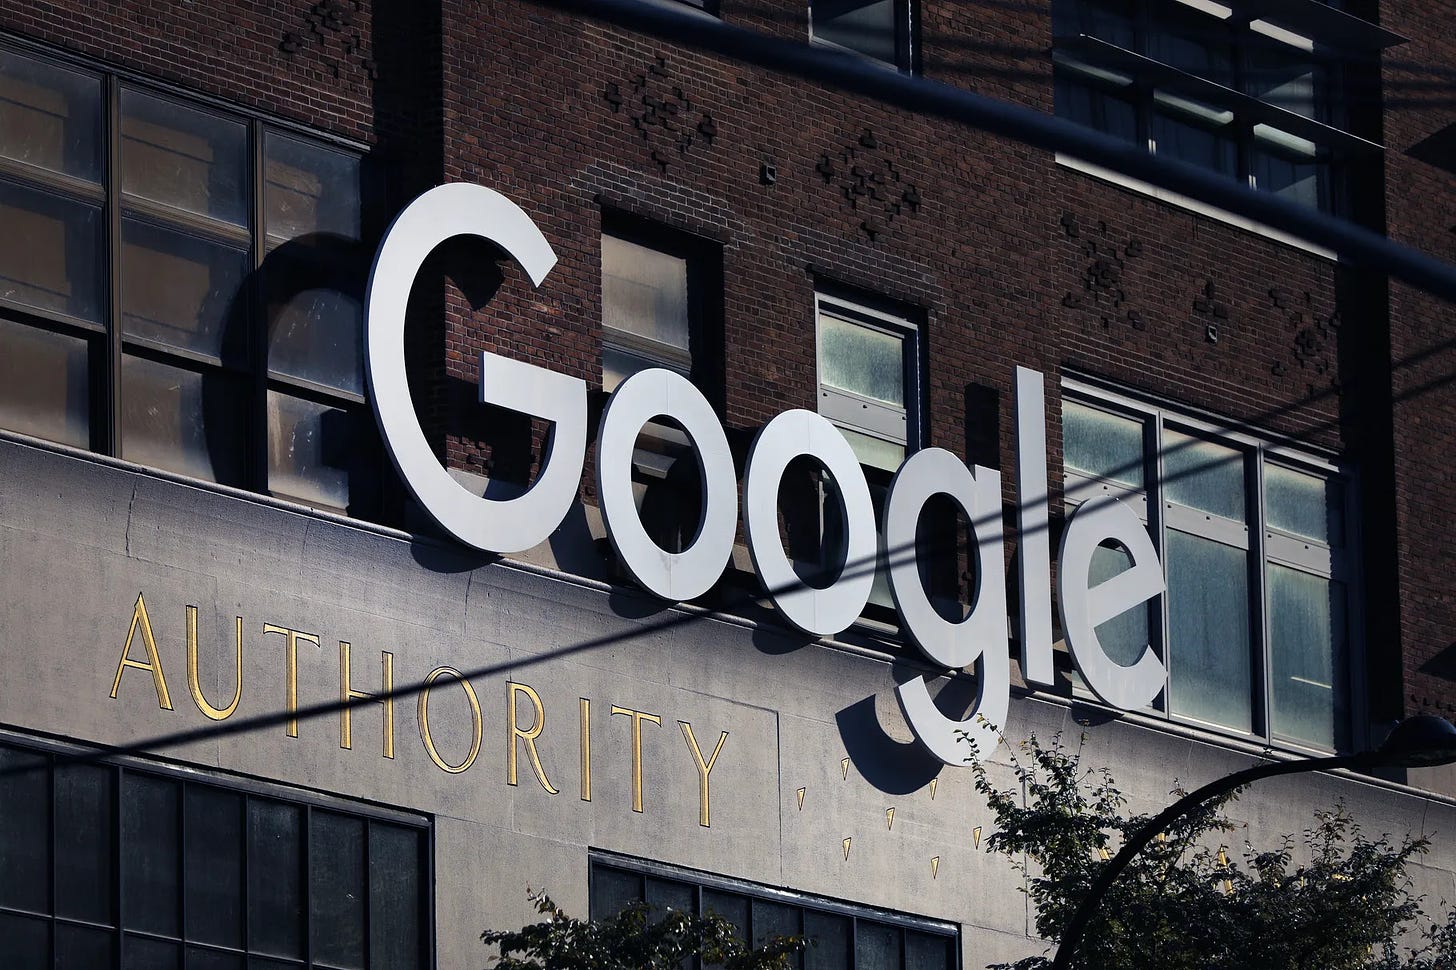 Google’s office in New York City